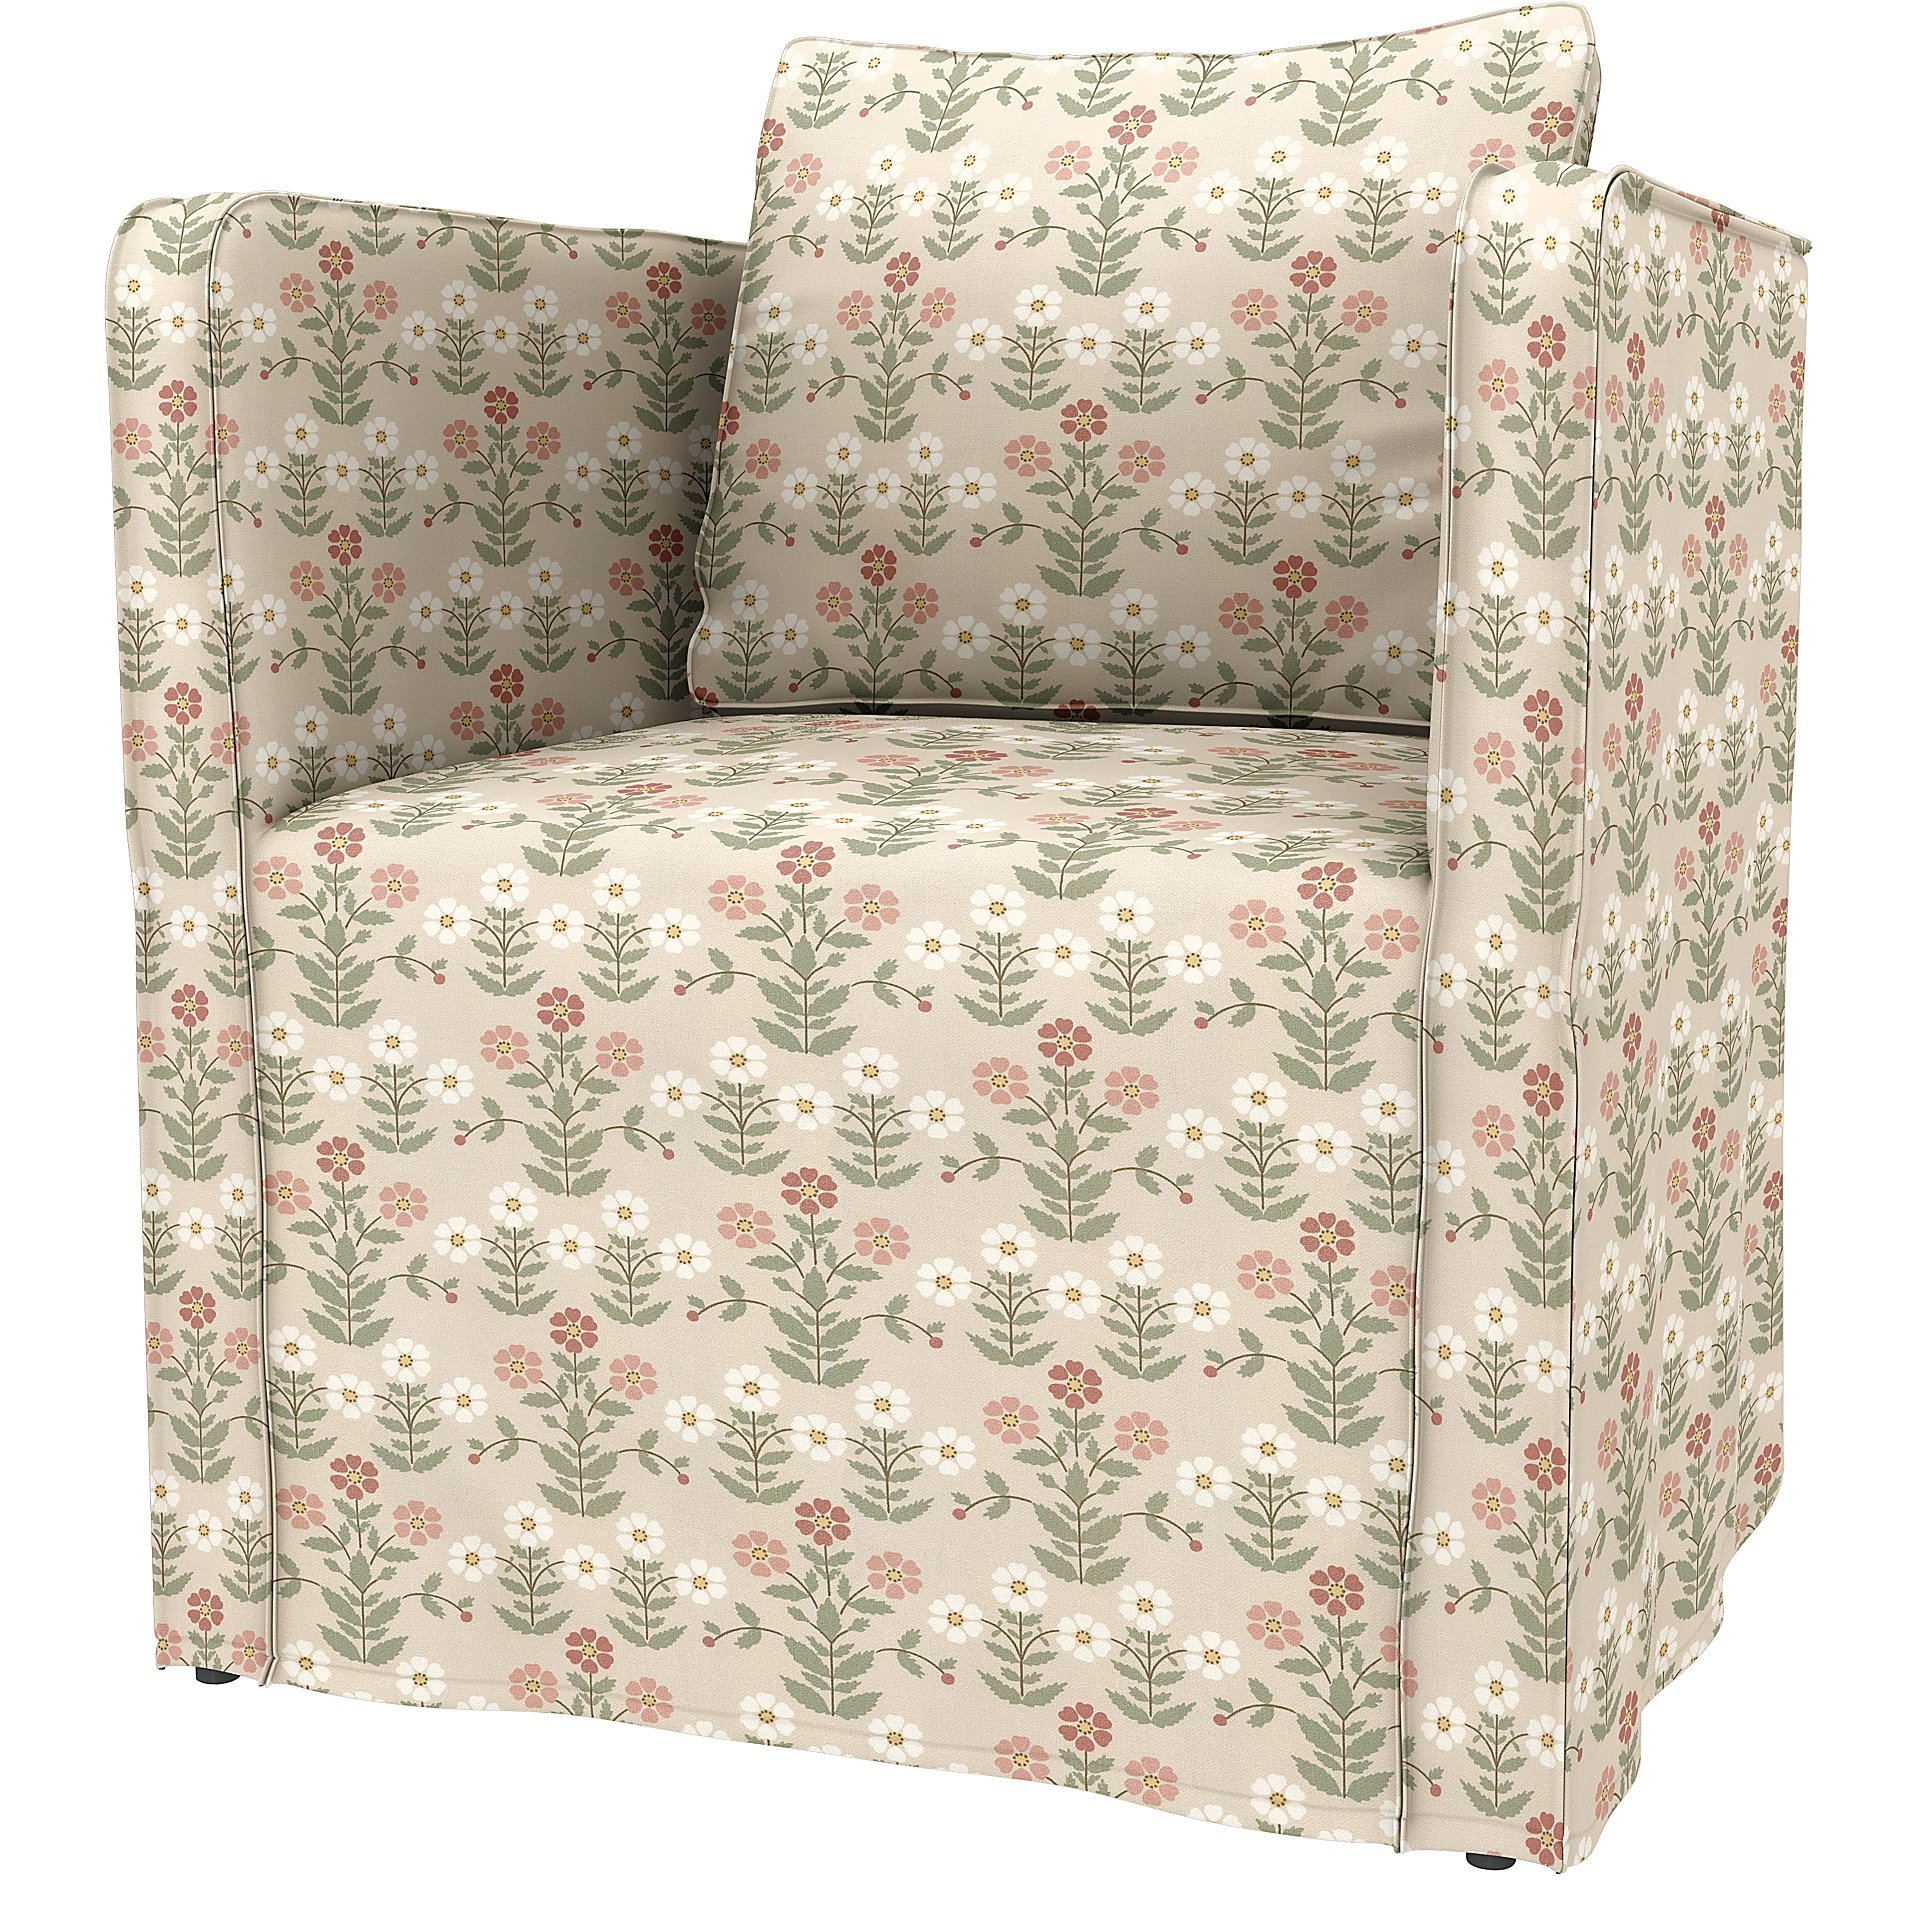 IKEA - Ekero armchair cover, Pink Sippor, BEMZ x BORASTAPETER COLLECTION - Bemz